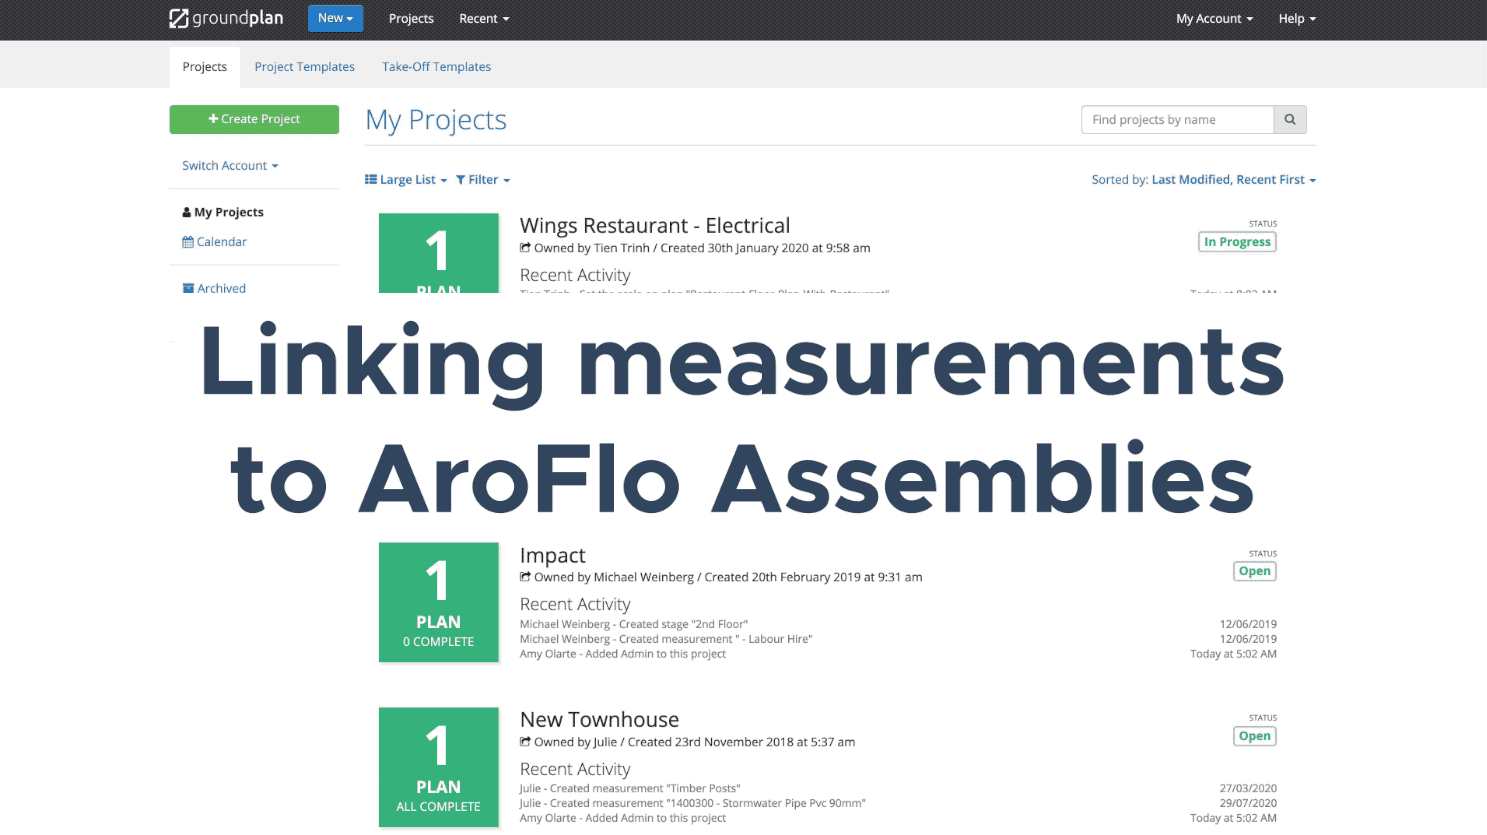 Linking measurements to AroFlo Assemblies 